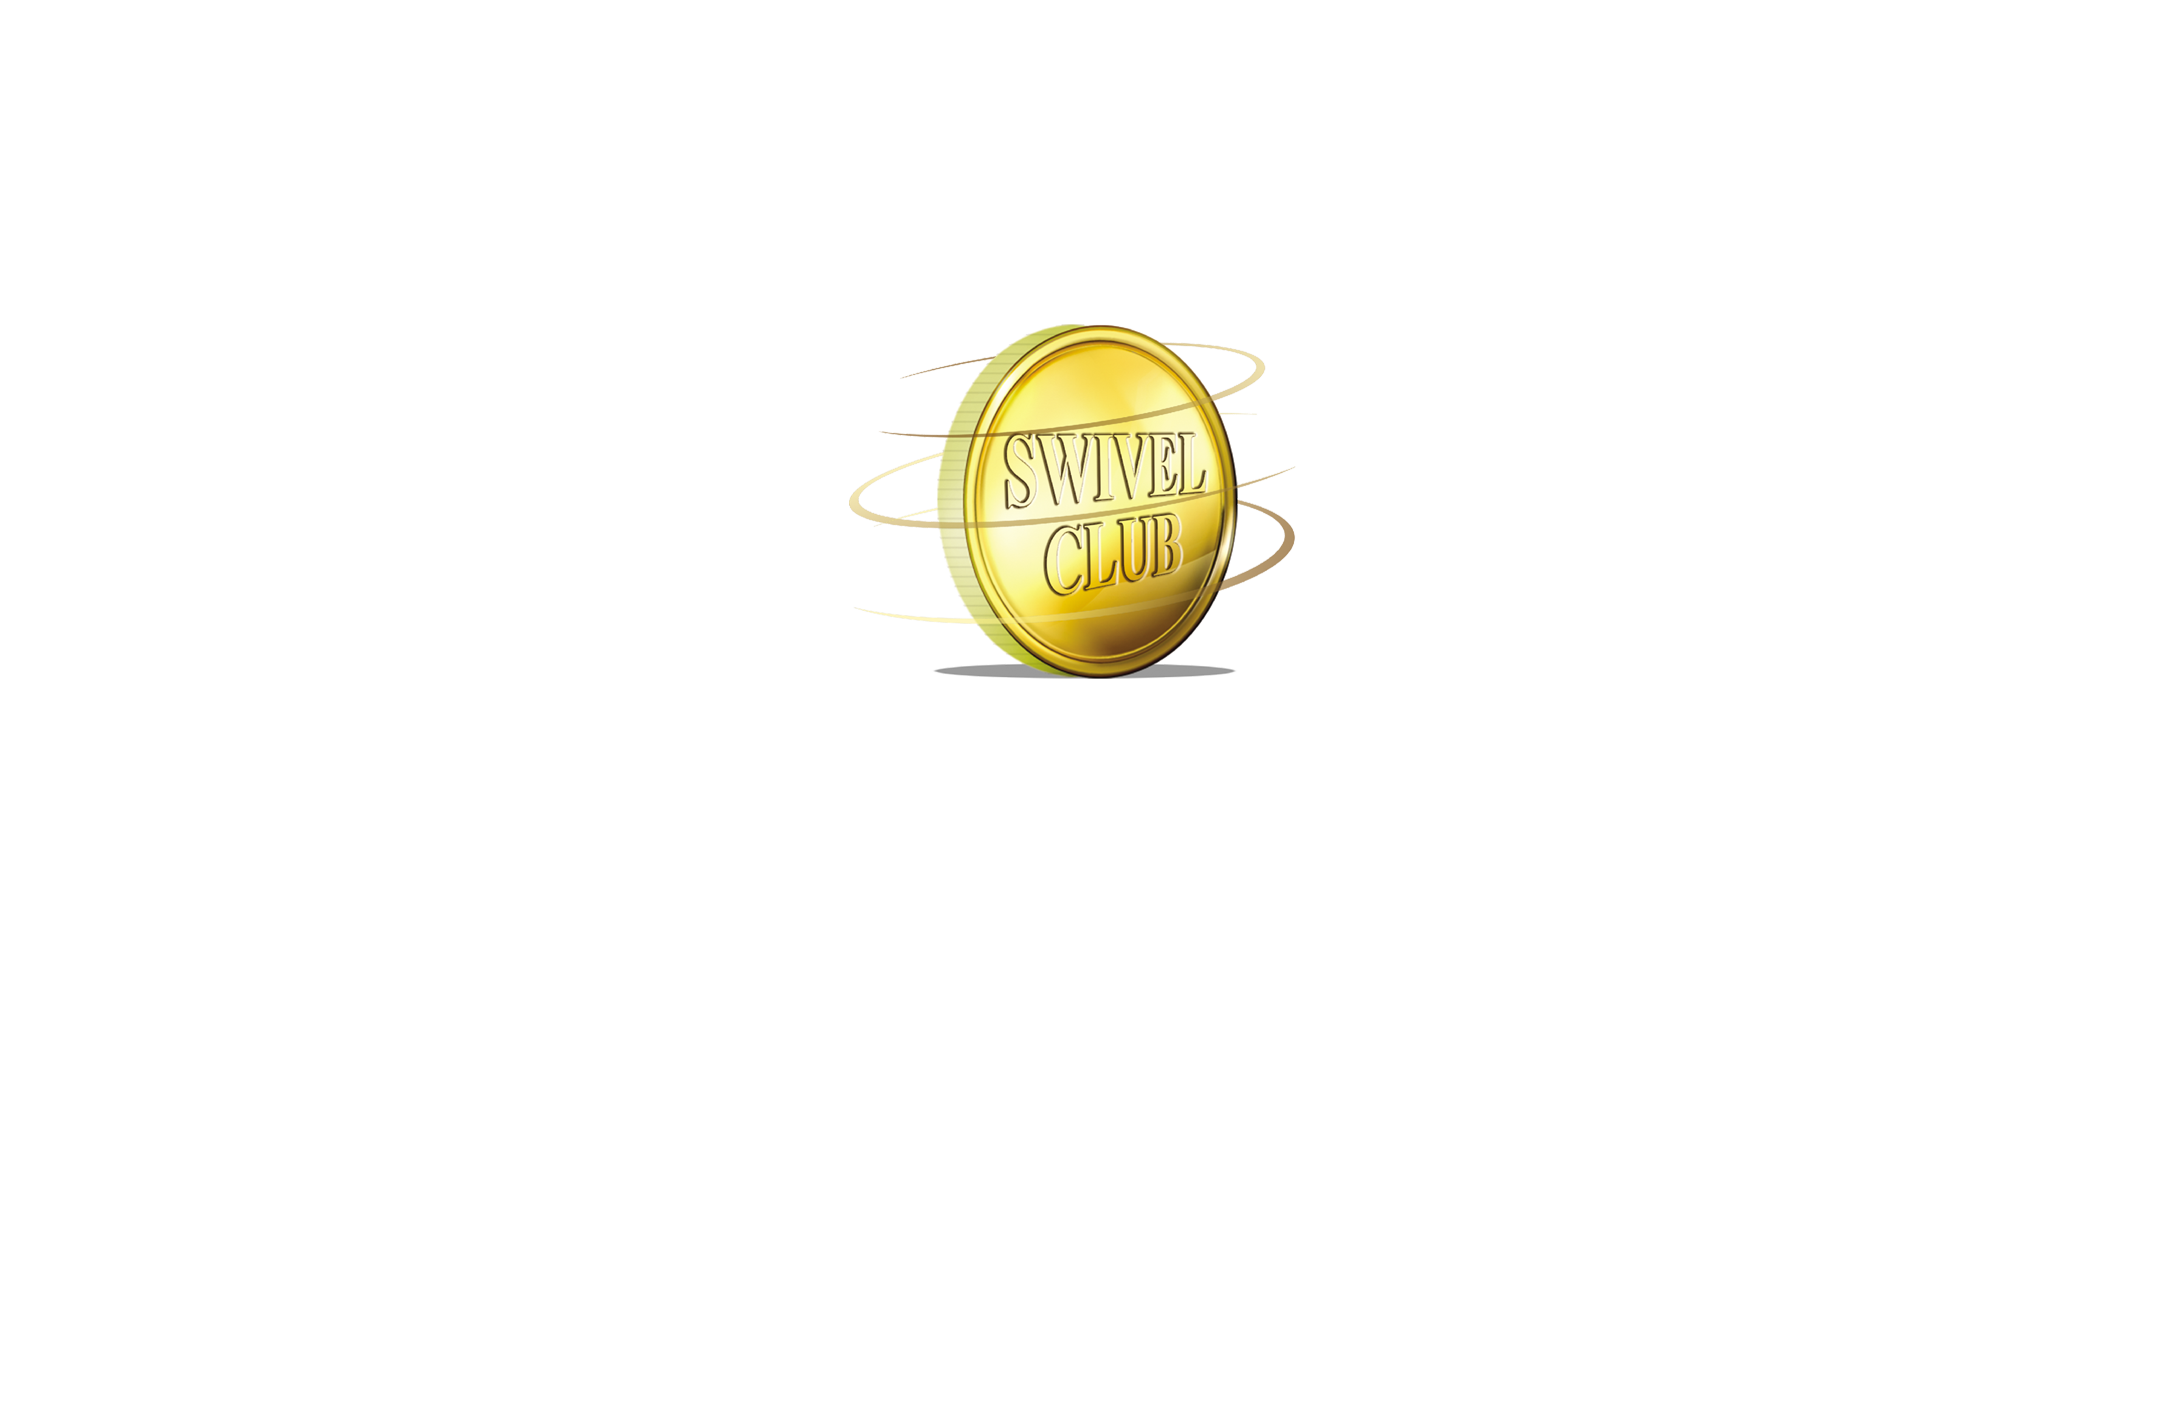 Swivel Club Charity